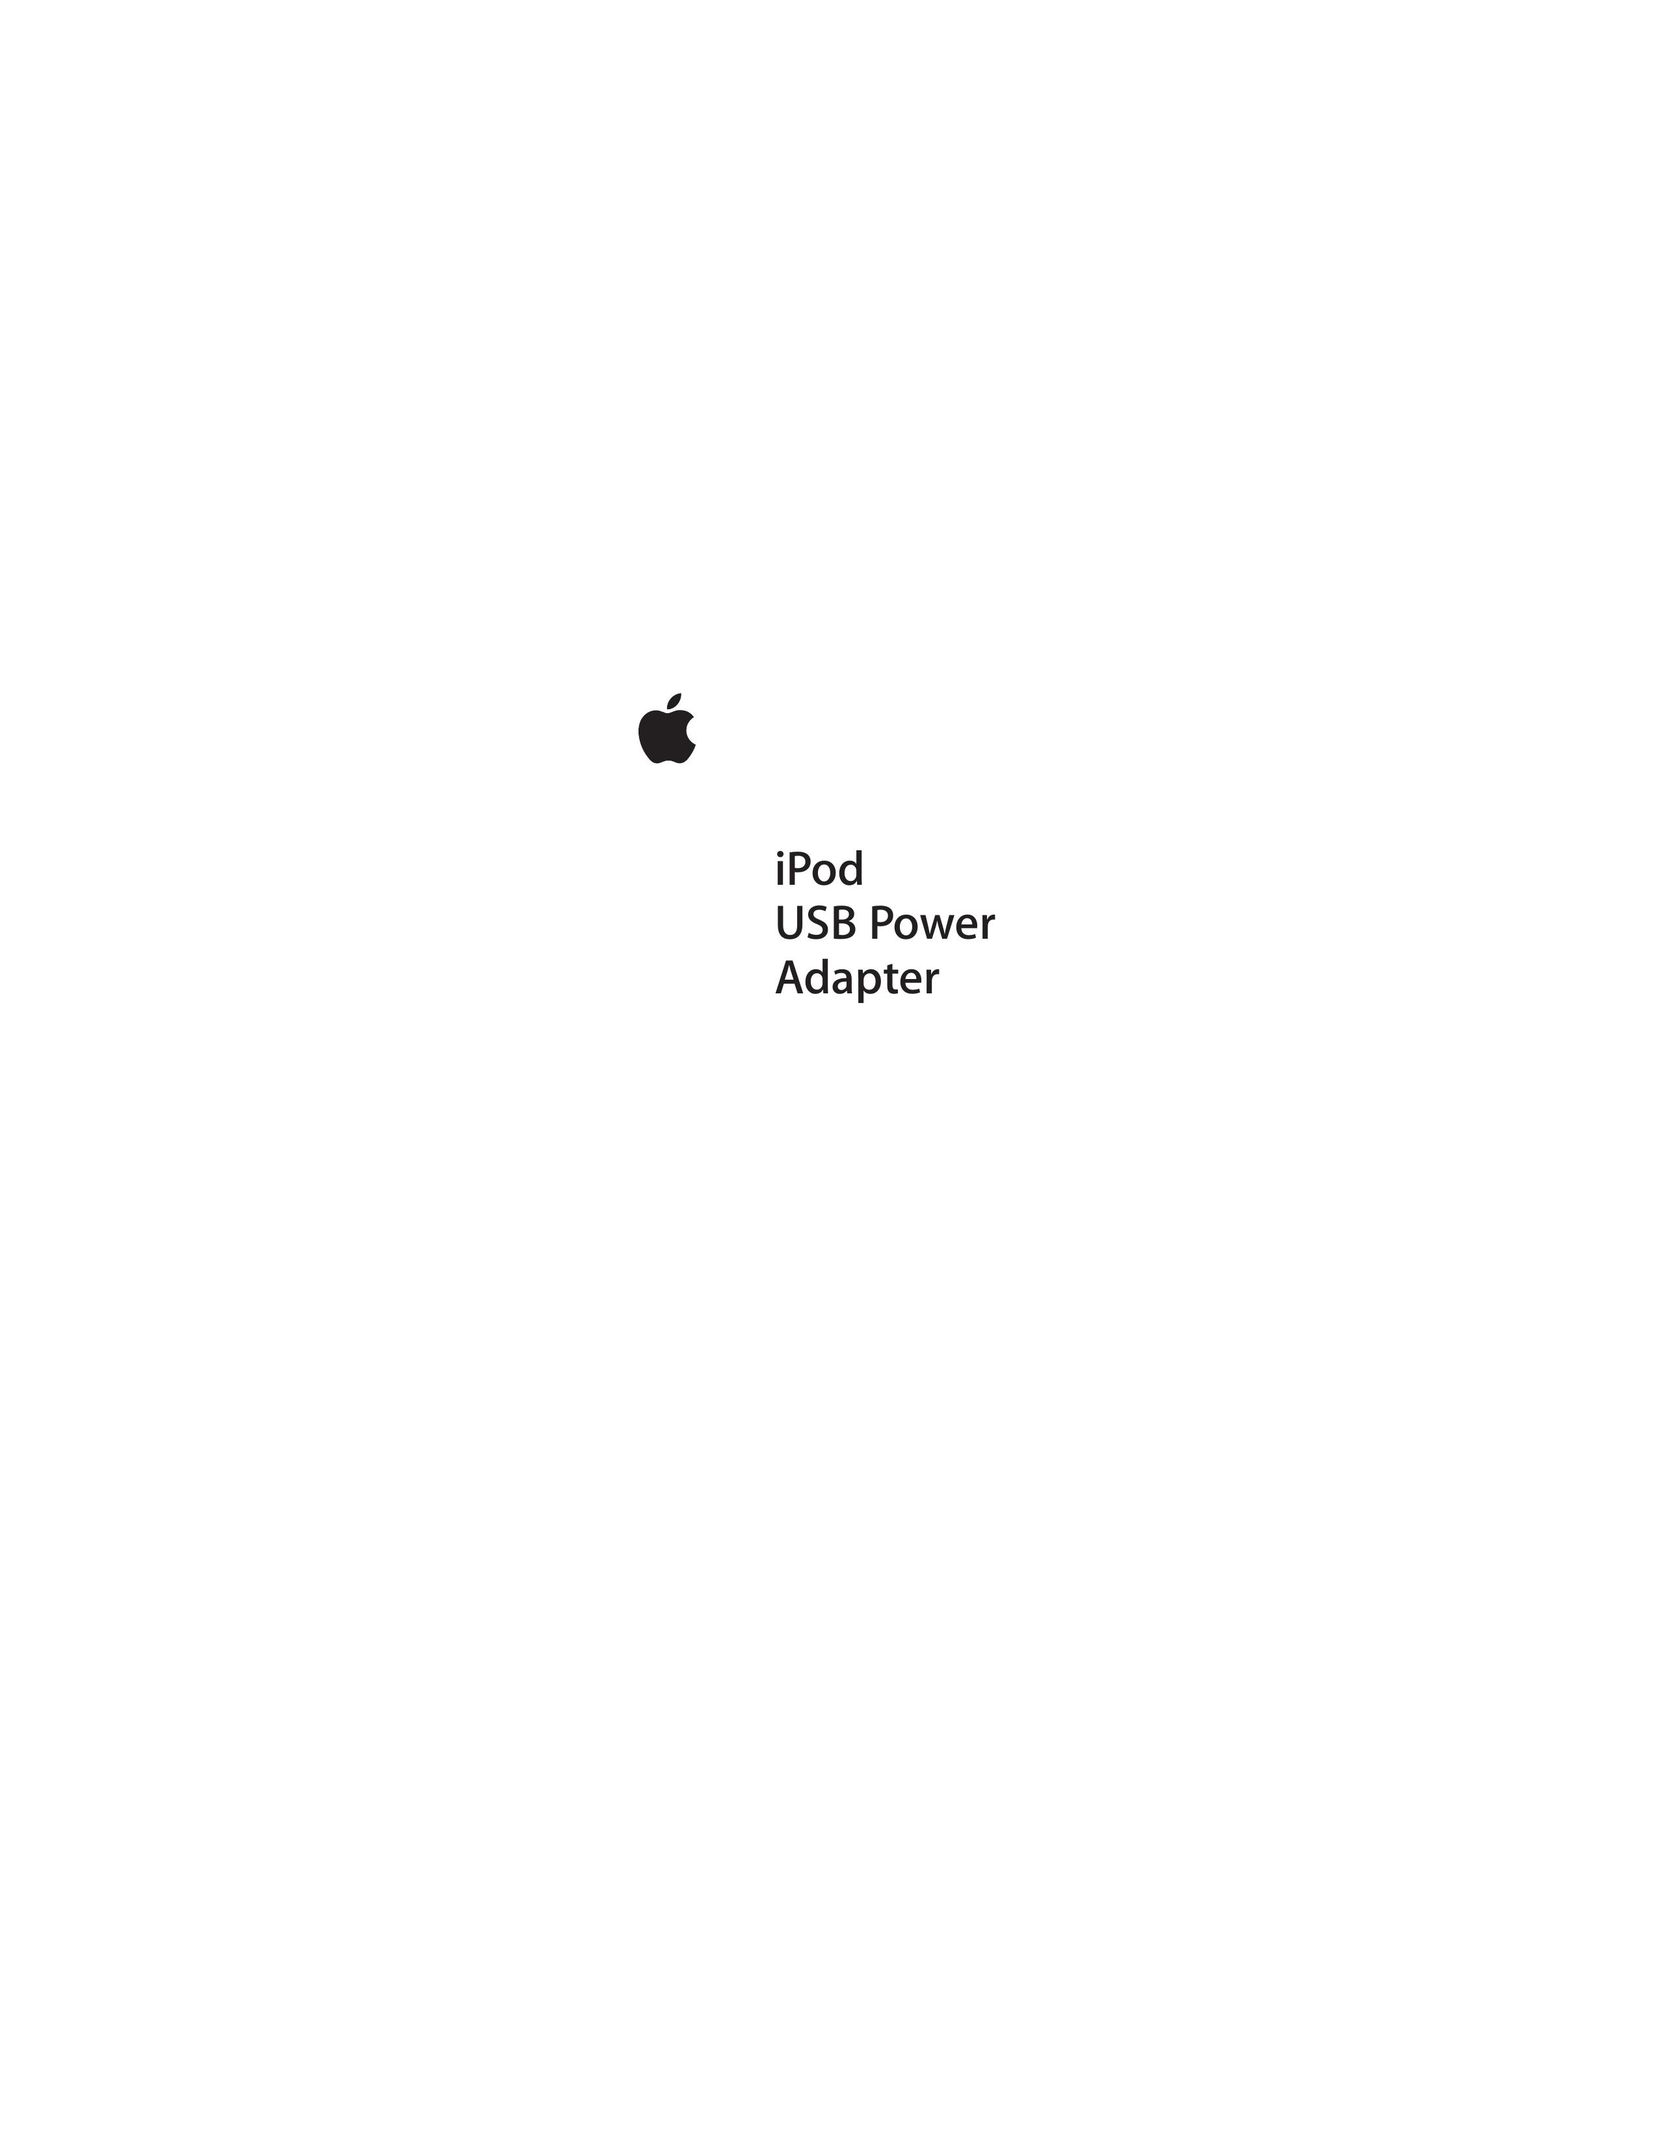 Apple iPod USB Power Adapter Network Card User Manual